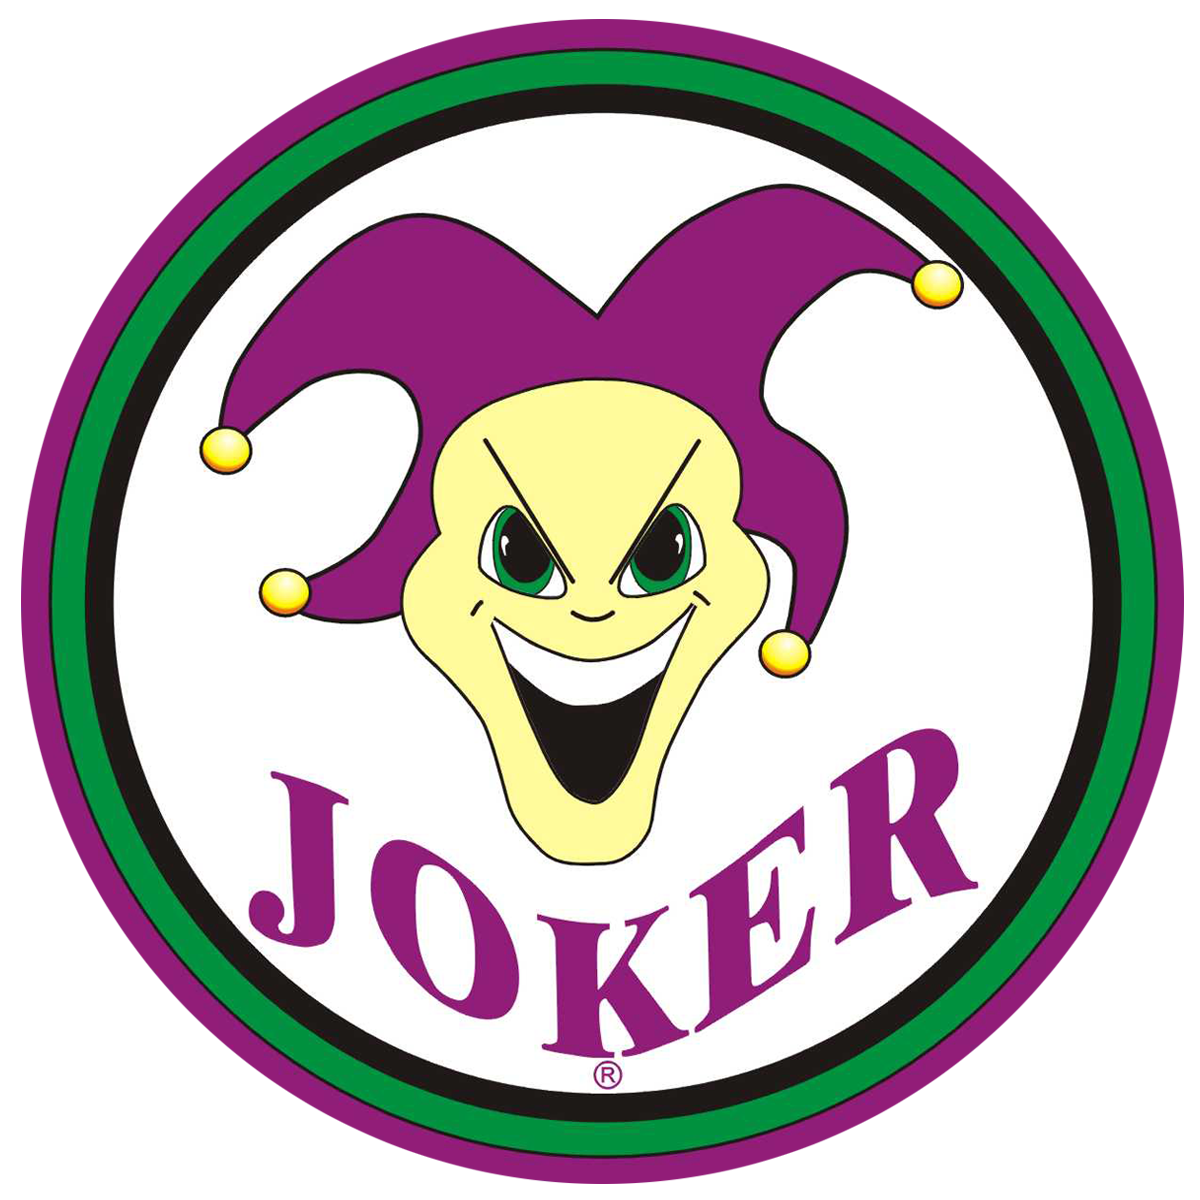 Joker Logos